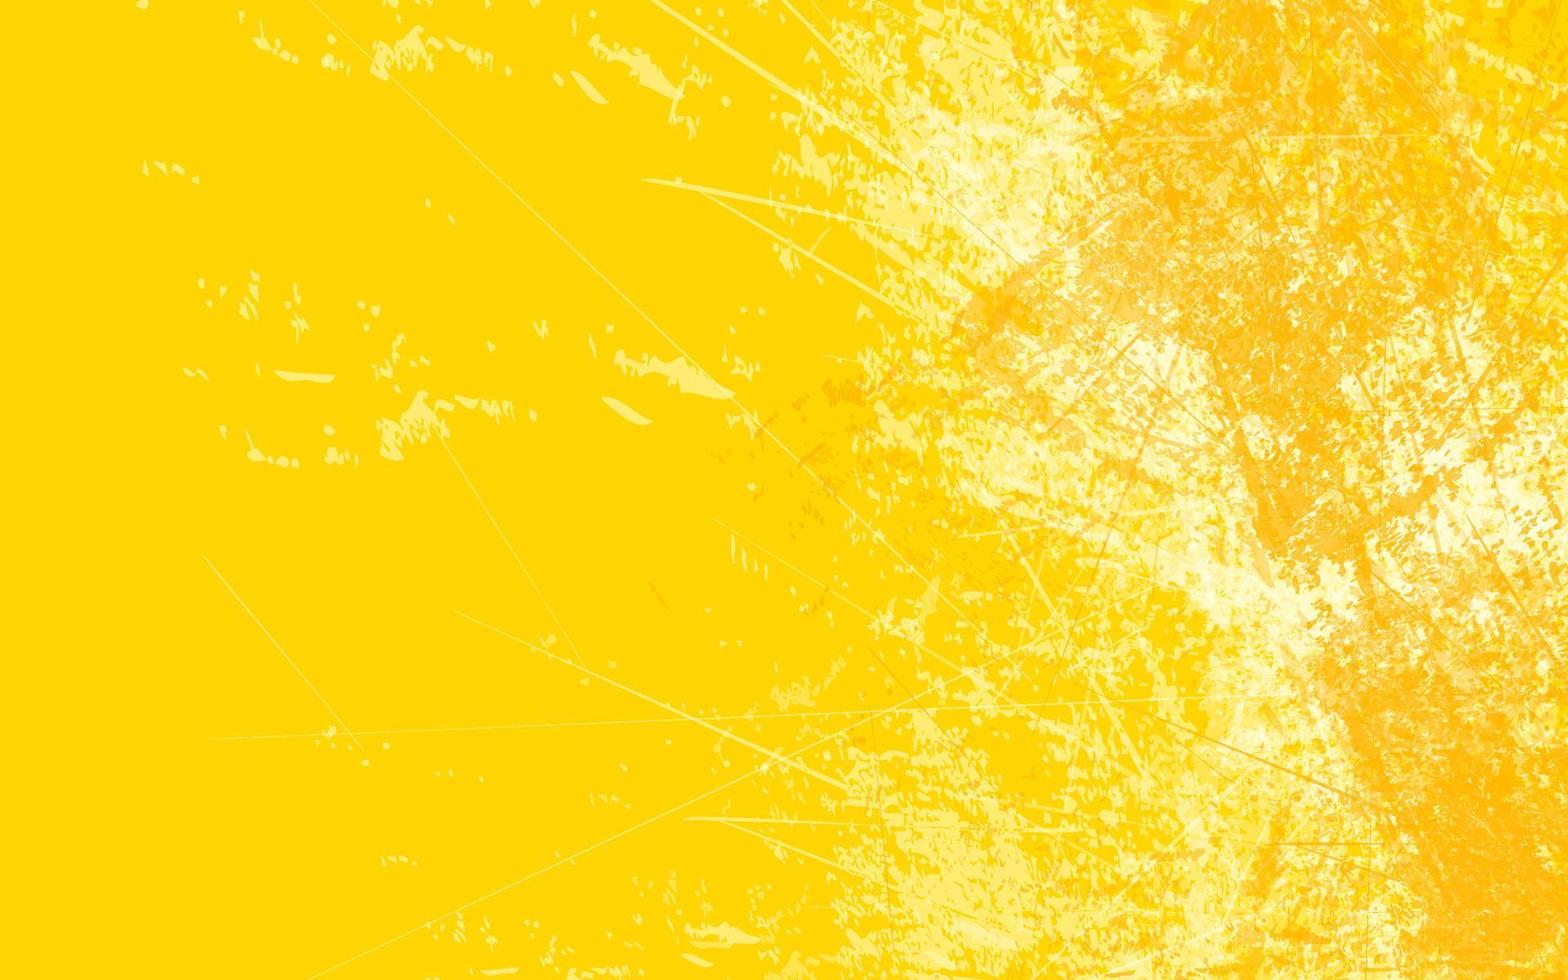 vector de fondo de pintura de salpicaduras de color amarillo de textura grunge abstracta